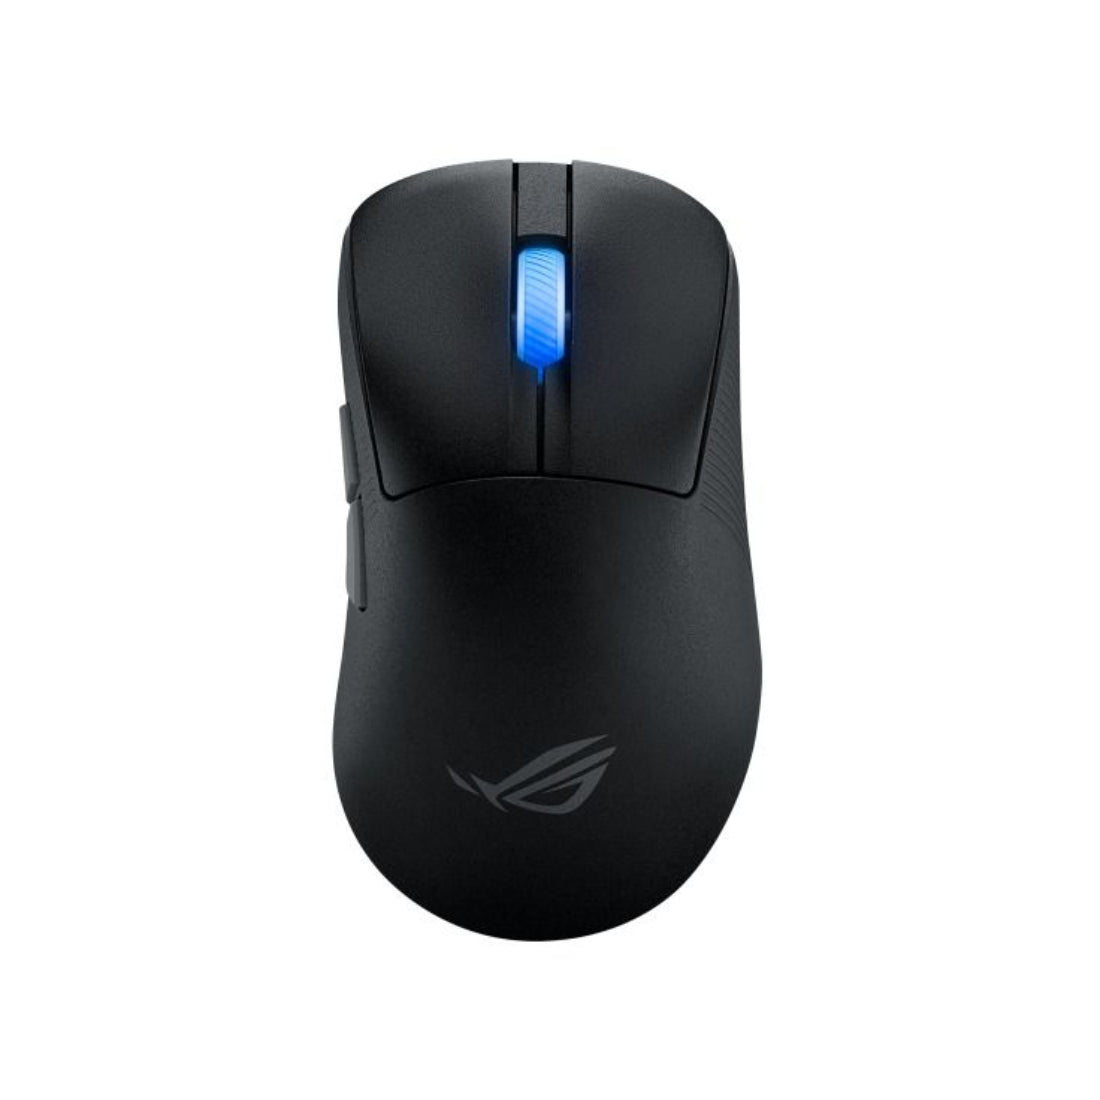 Asus ROG Keris II Ace Wireless Gaming Mouse - Black - فأرة